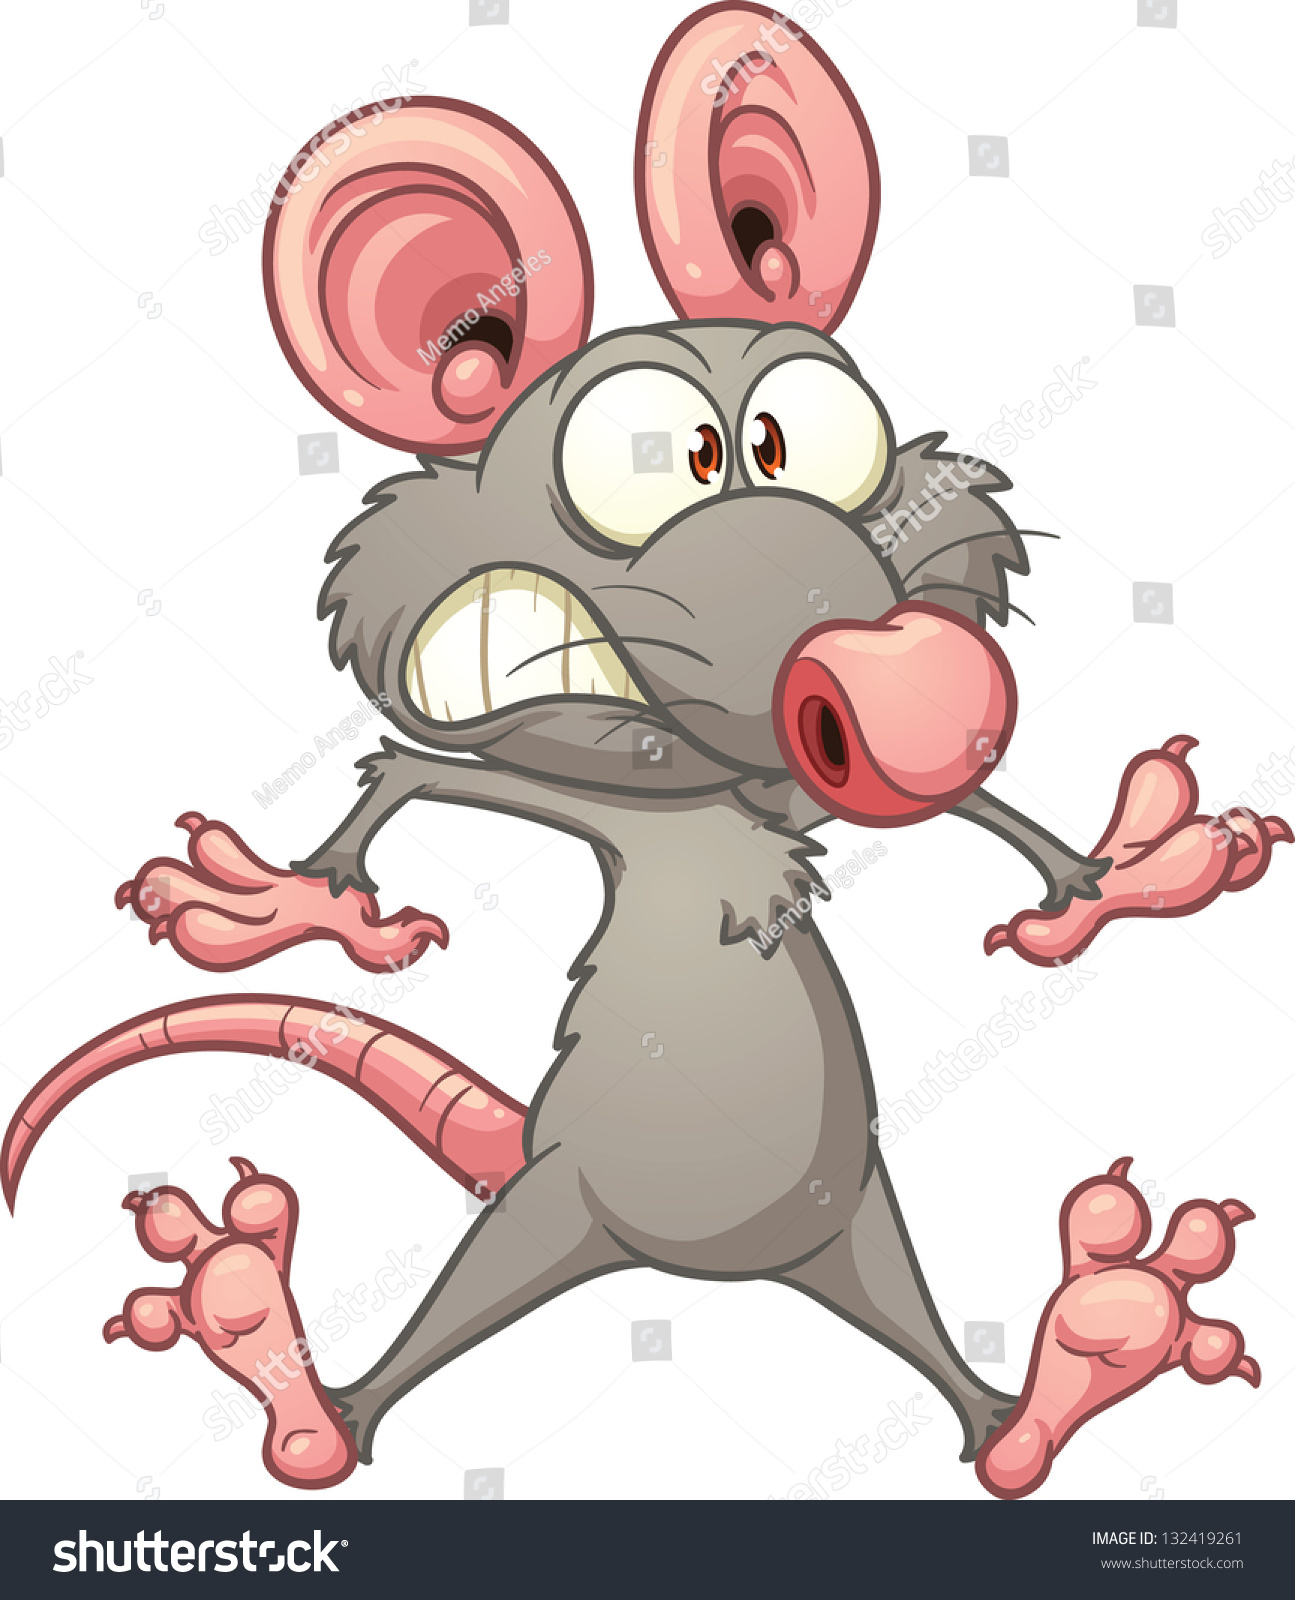 clipart cartoon rats - photo #50